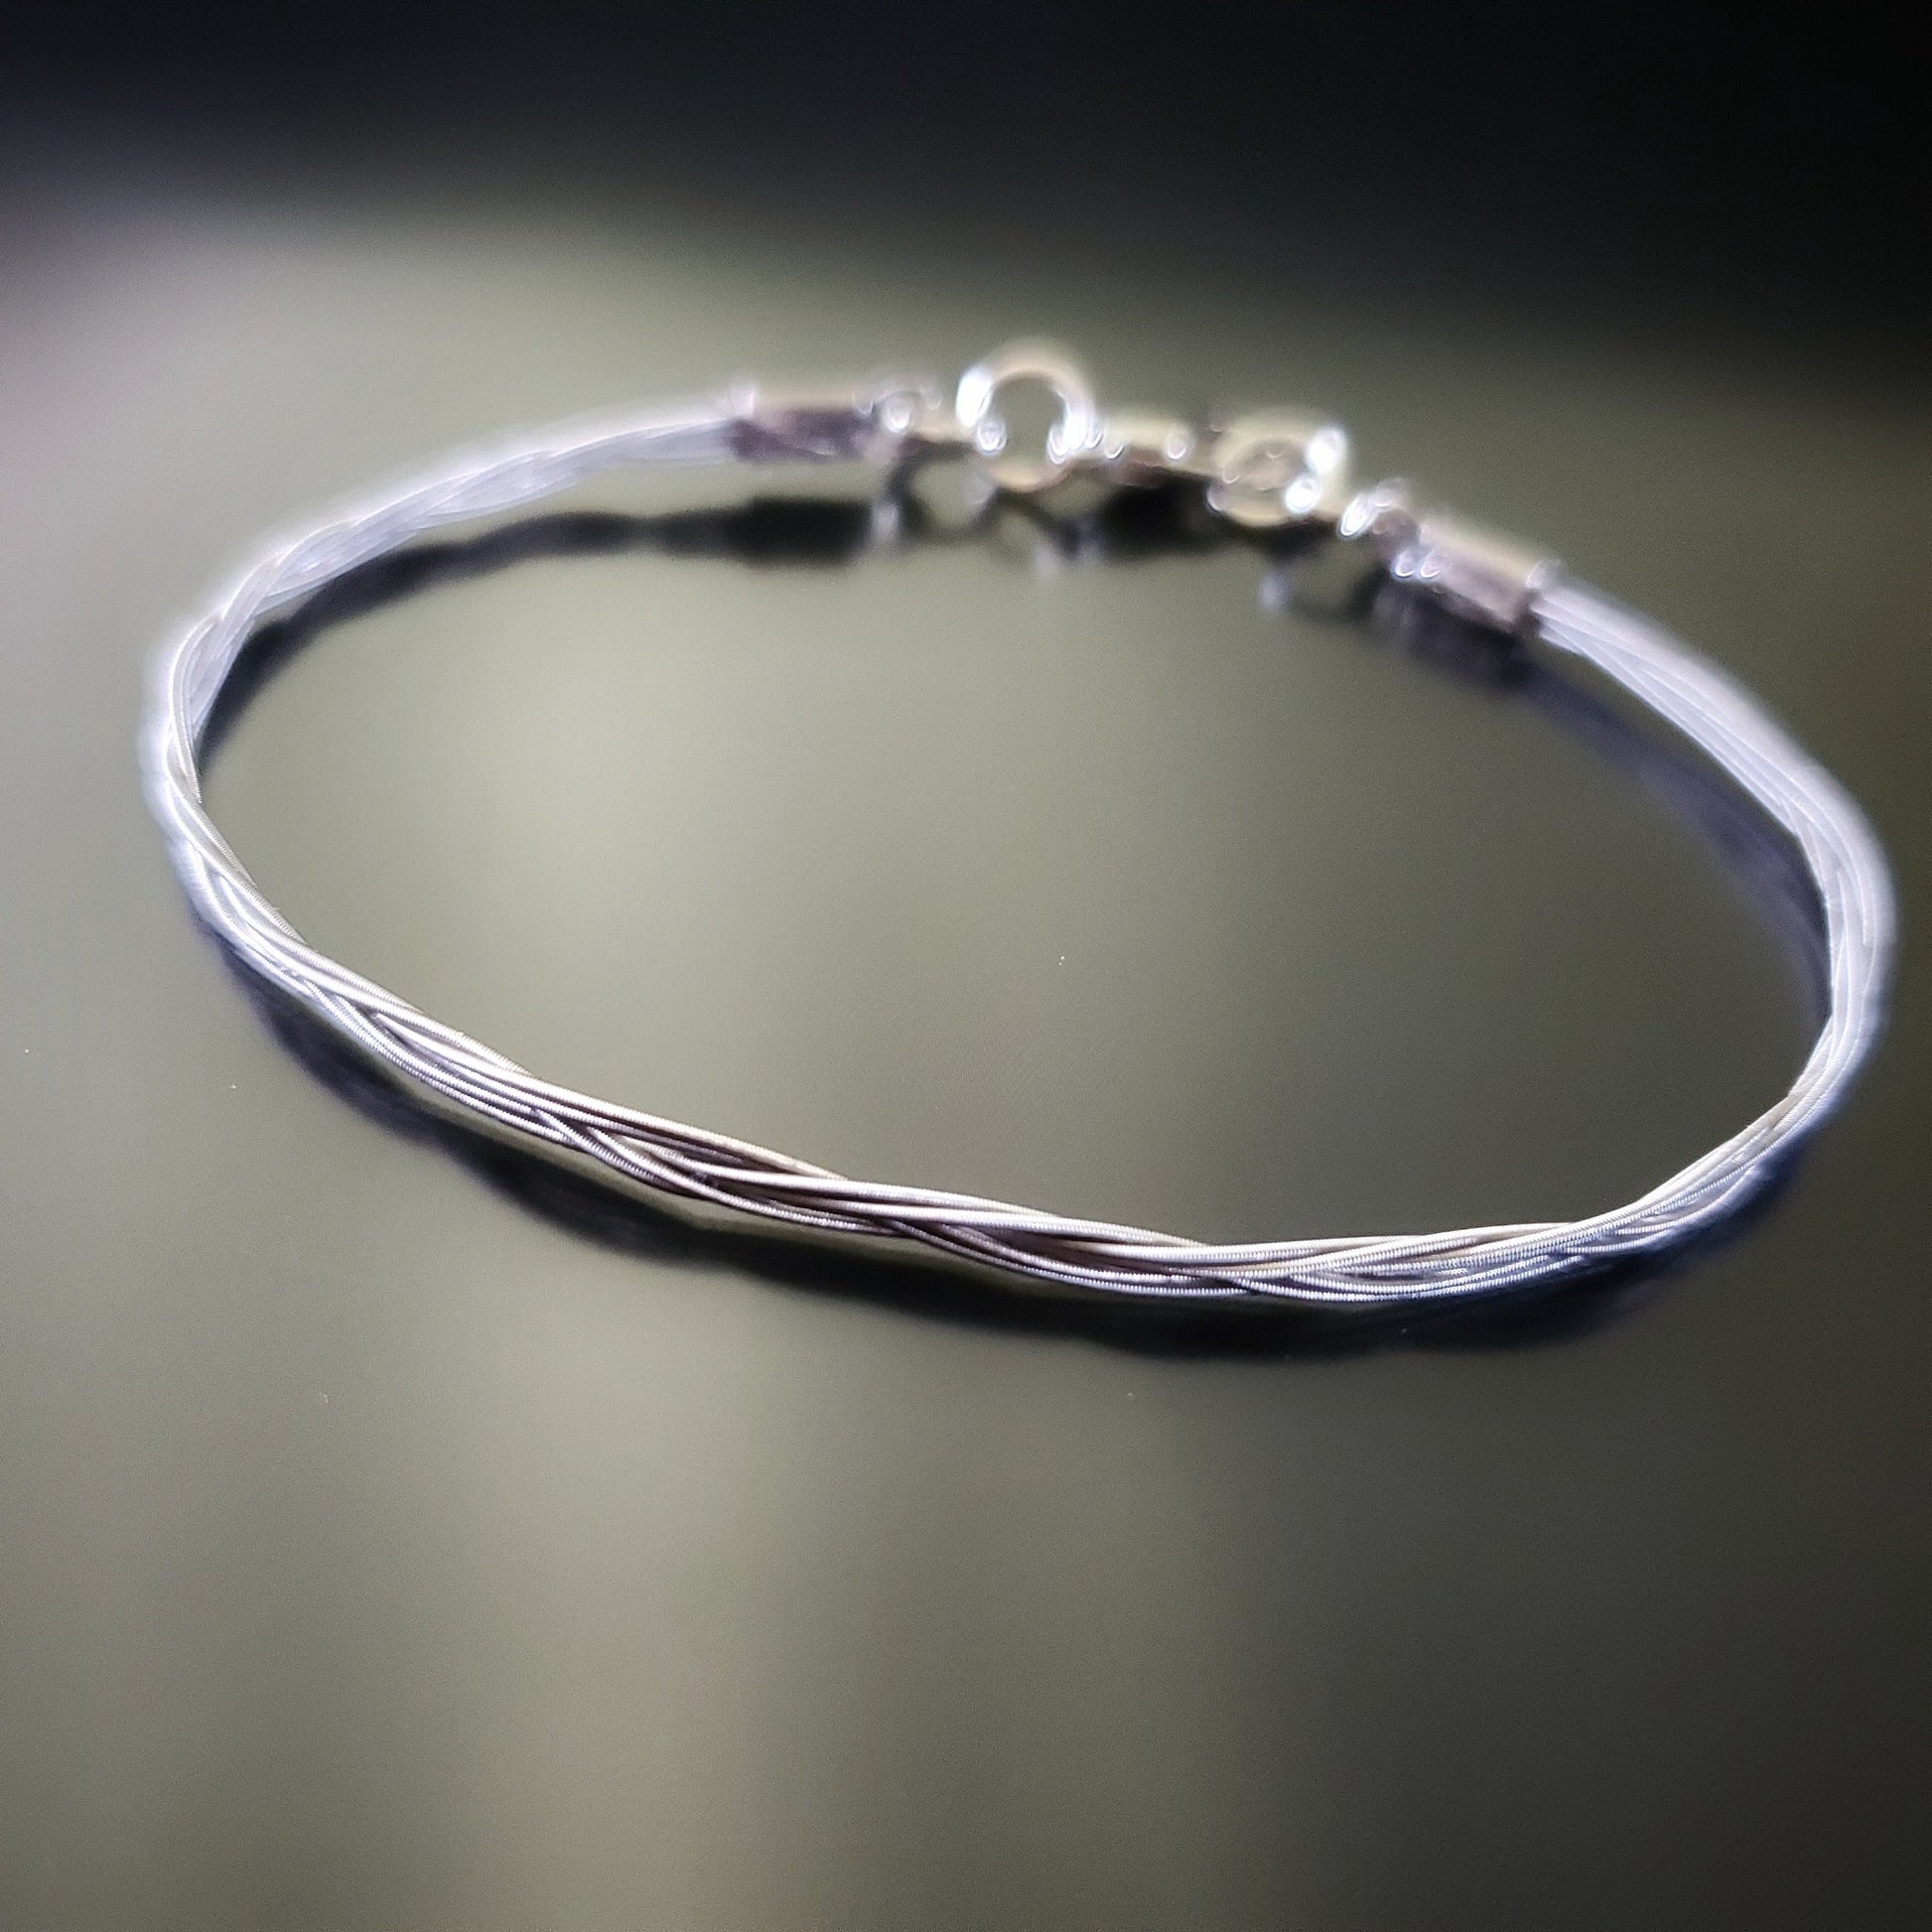 silver banjo string bracelet on a black background